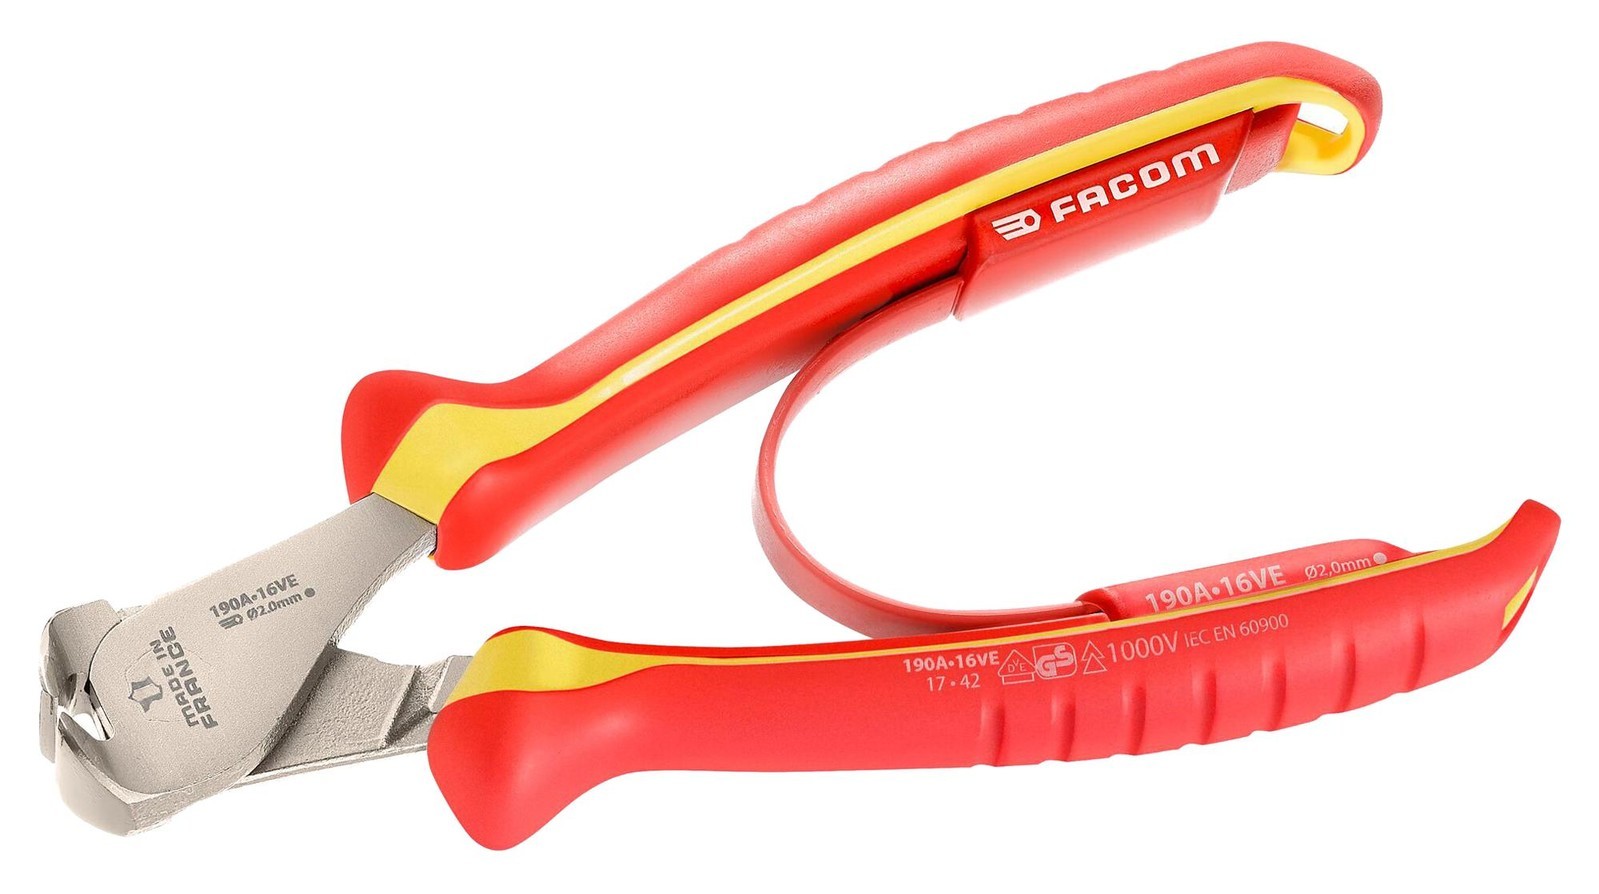 Facom 190A.16Ve End Cutter, 2mm, 160mm